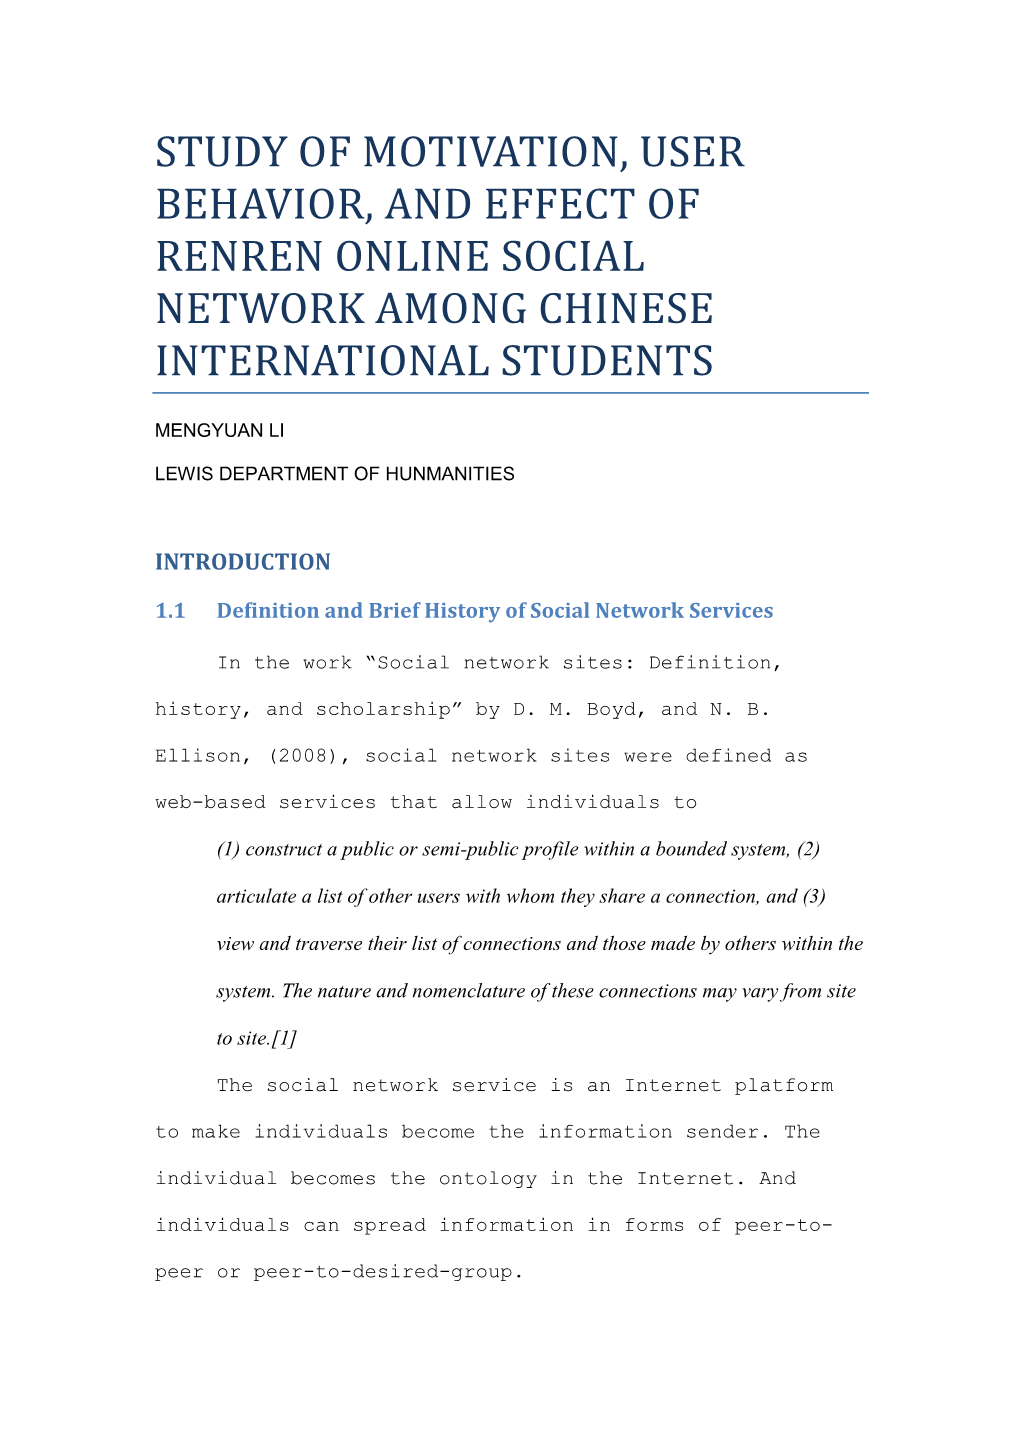 Study of Motivation, User Behavior, and Effect of Renren Online Social Network Among Chinese International Students